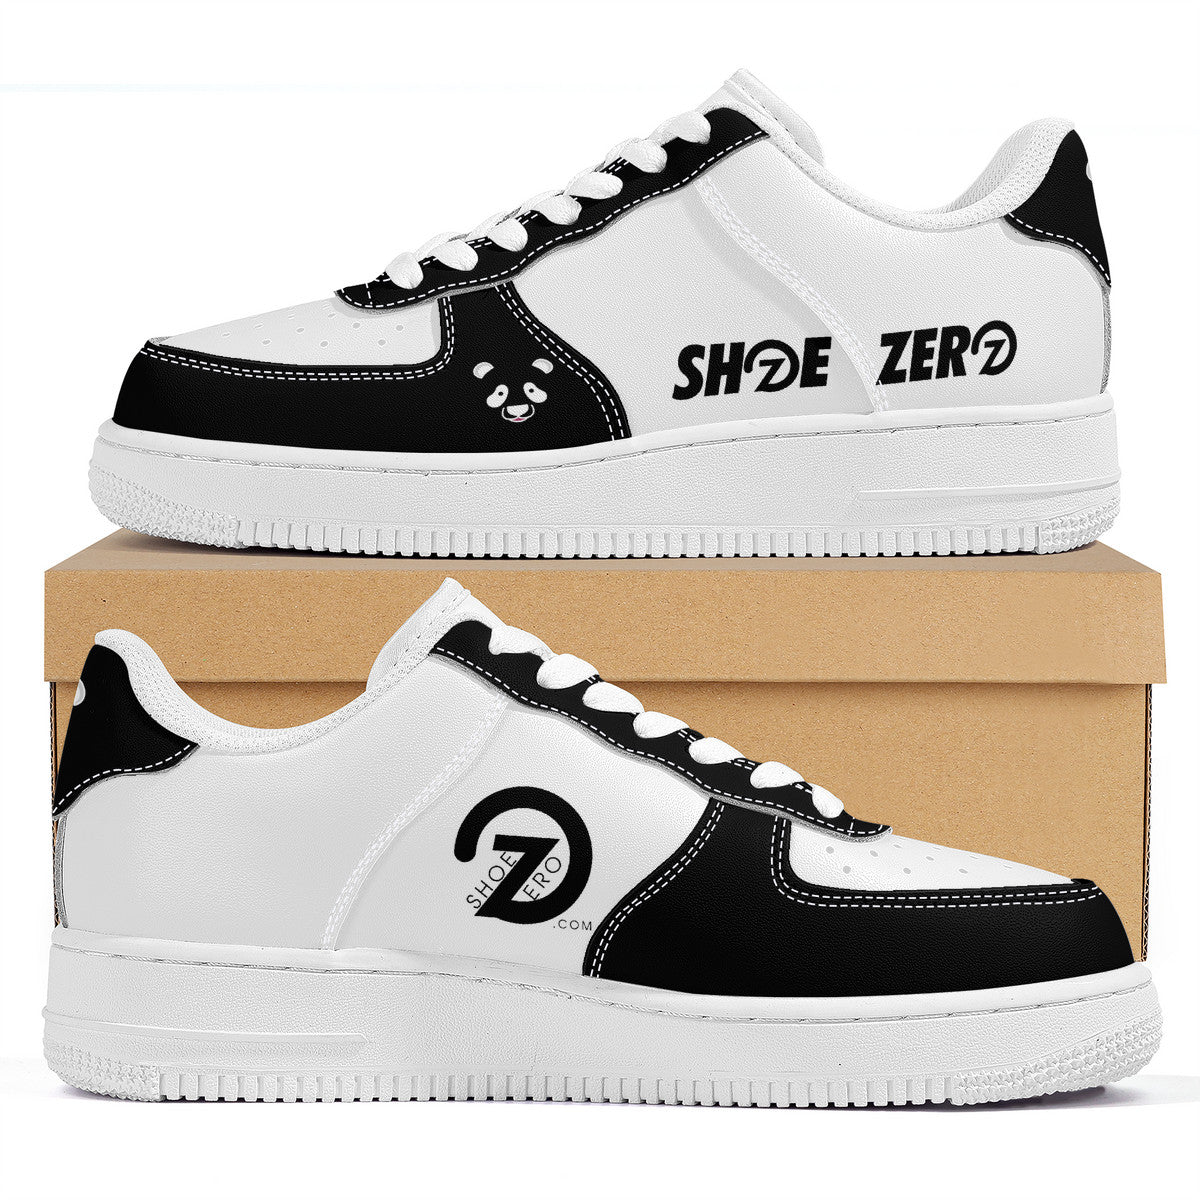 Shoe Zero Panda | Black and White Color Reversal On Right & Left | Low Top Custom Sneaker - Shoe Zero